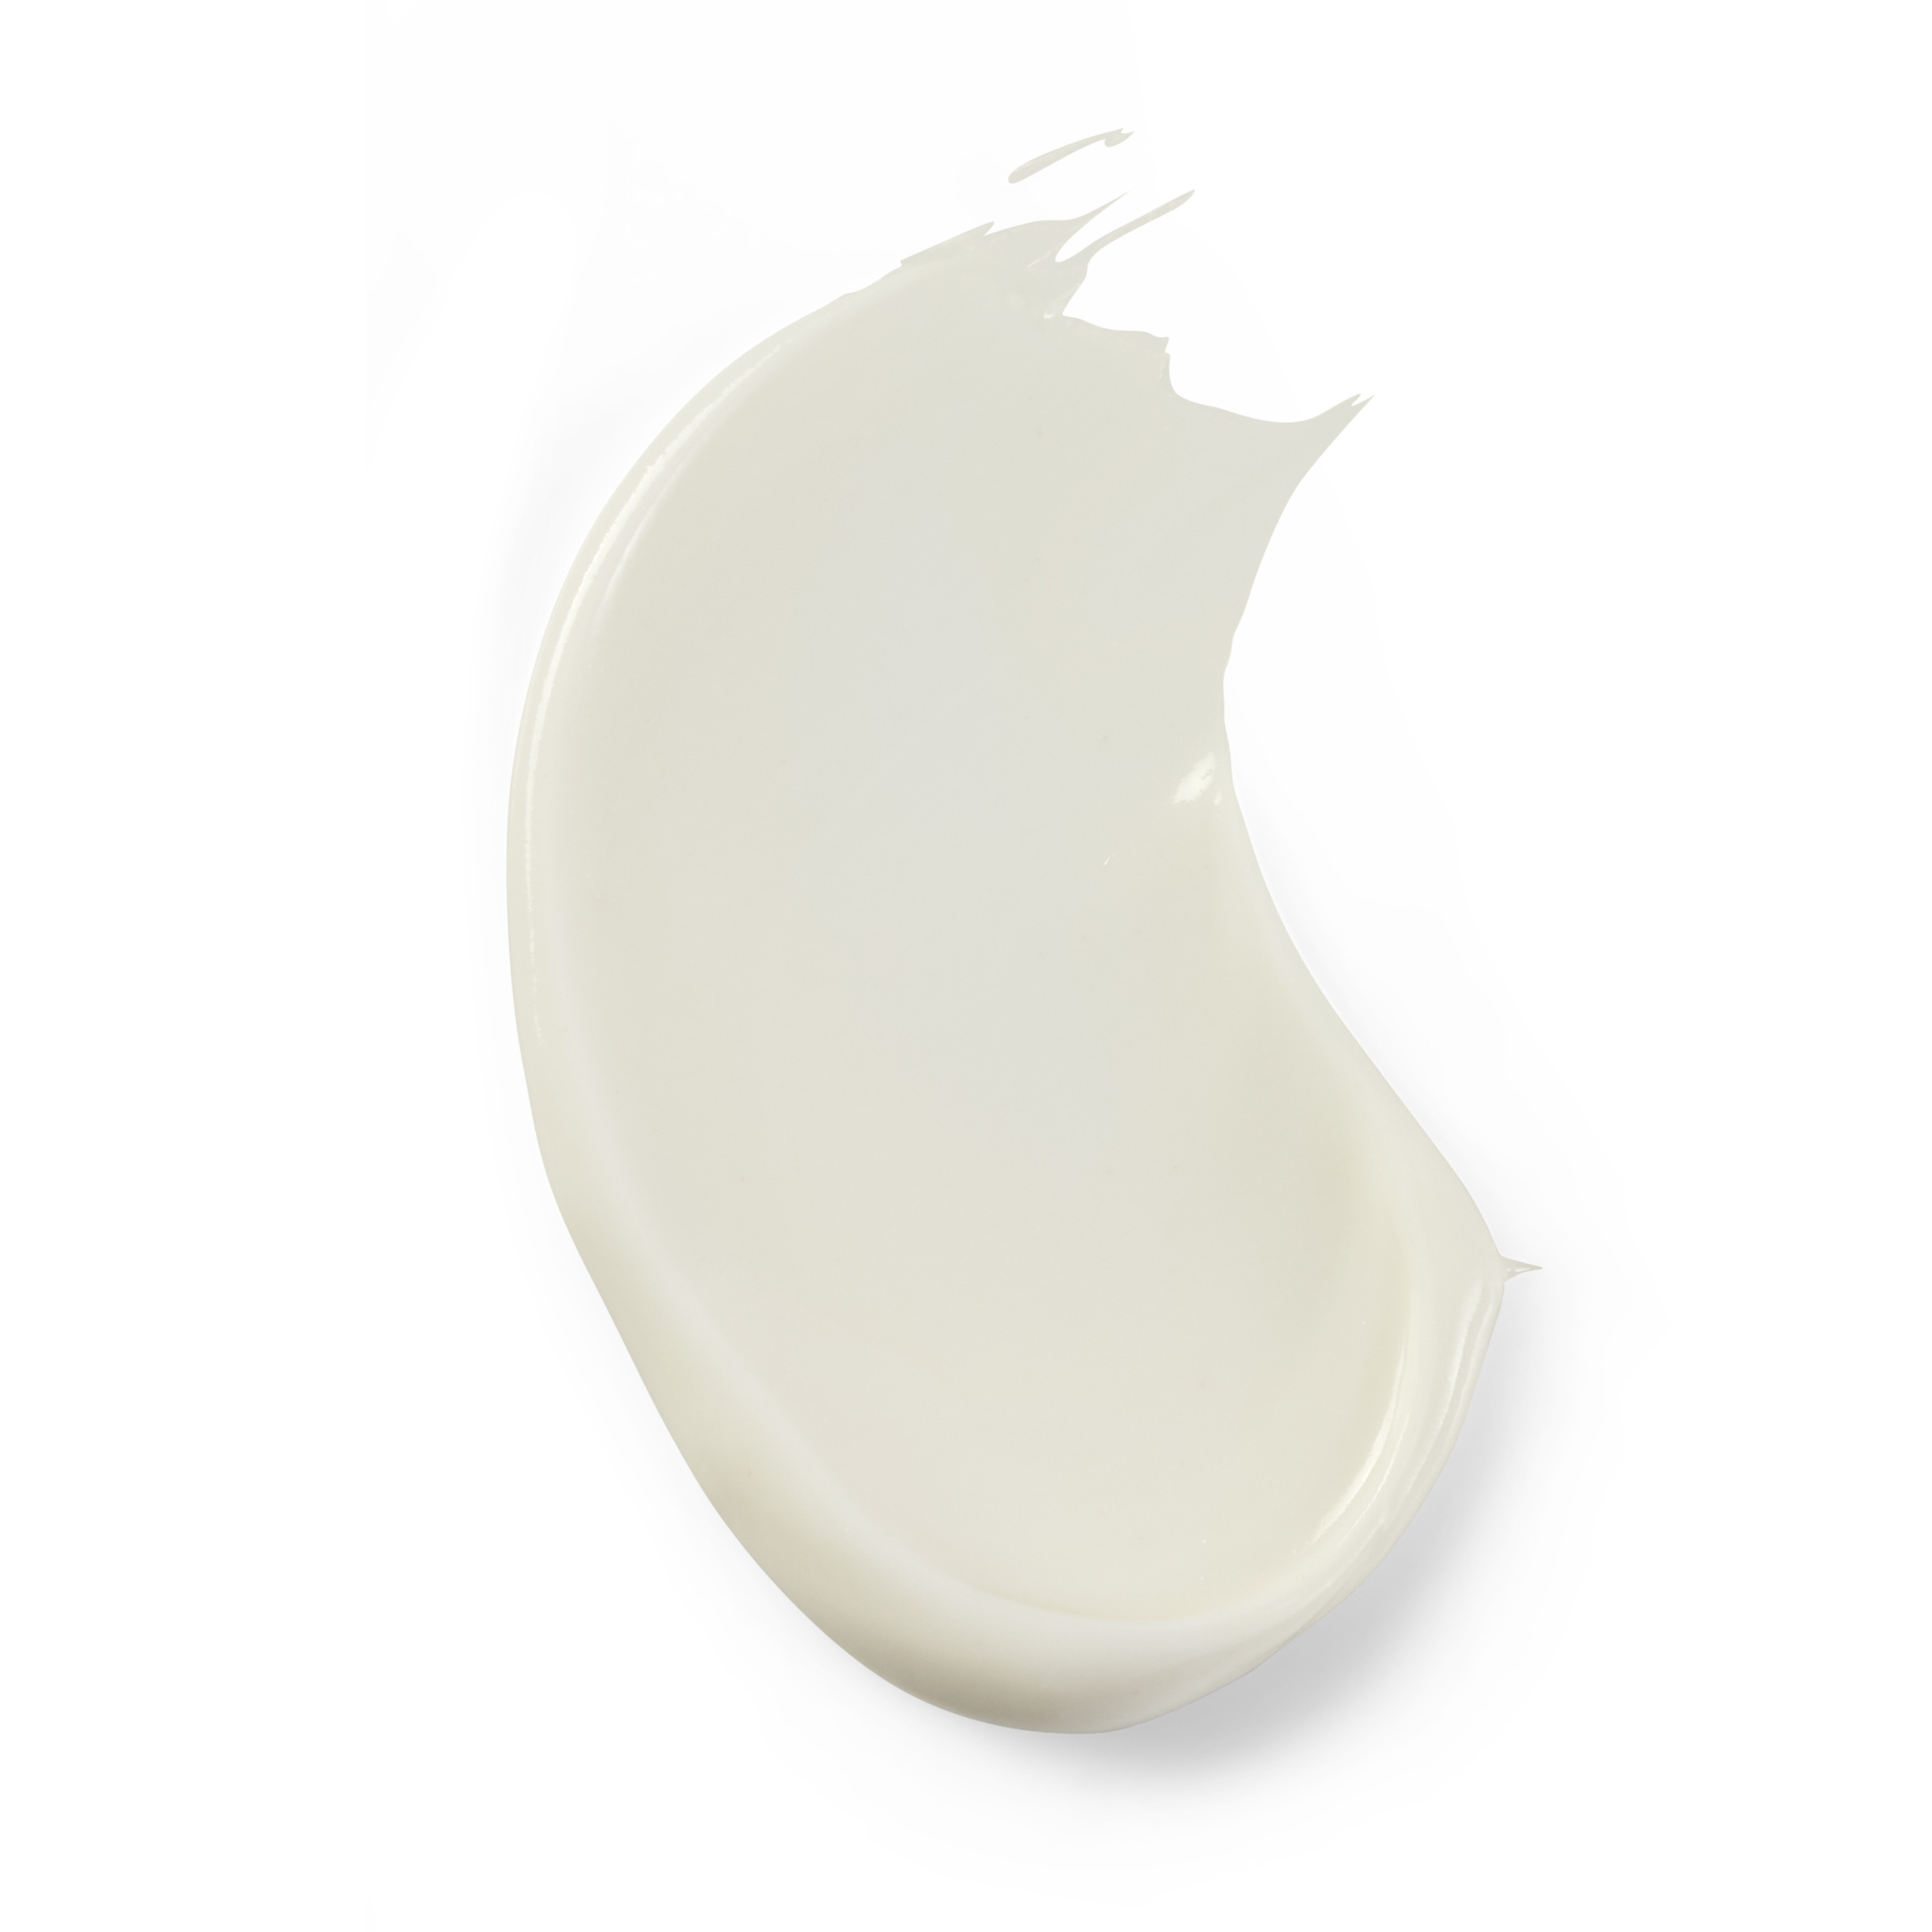 Eucerin Baby Eczema Relief Body Cream, Fragrance Free, 8 oz Tube - image 2 of 5